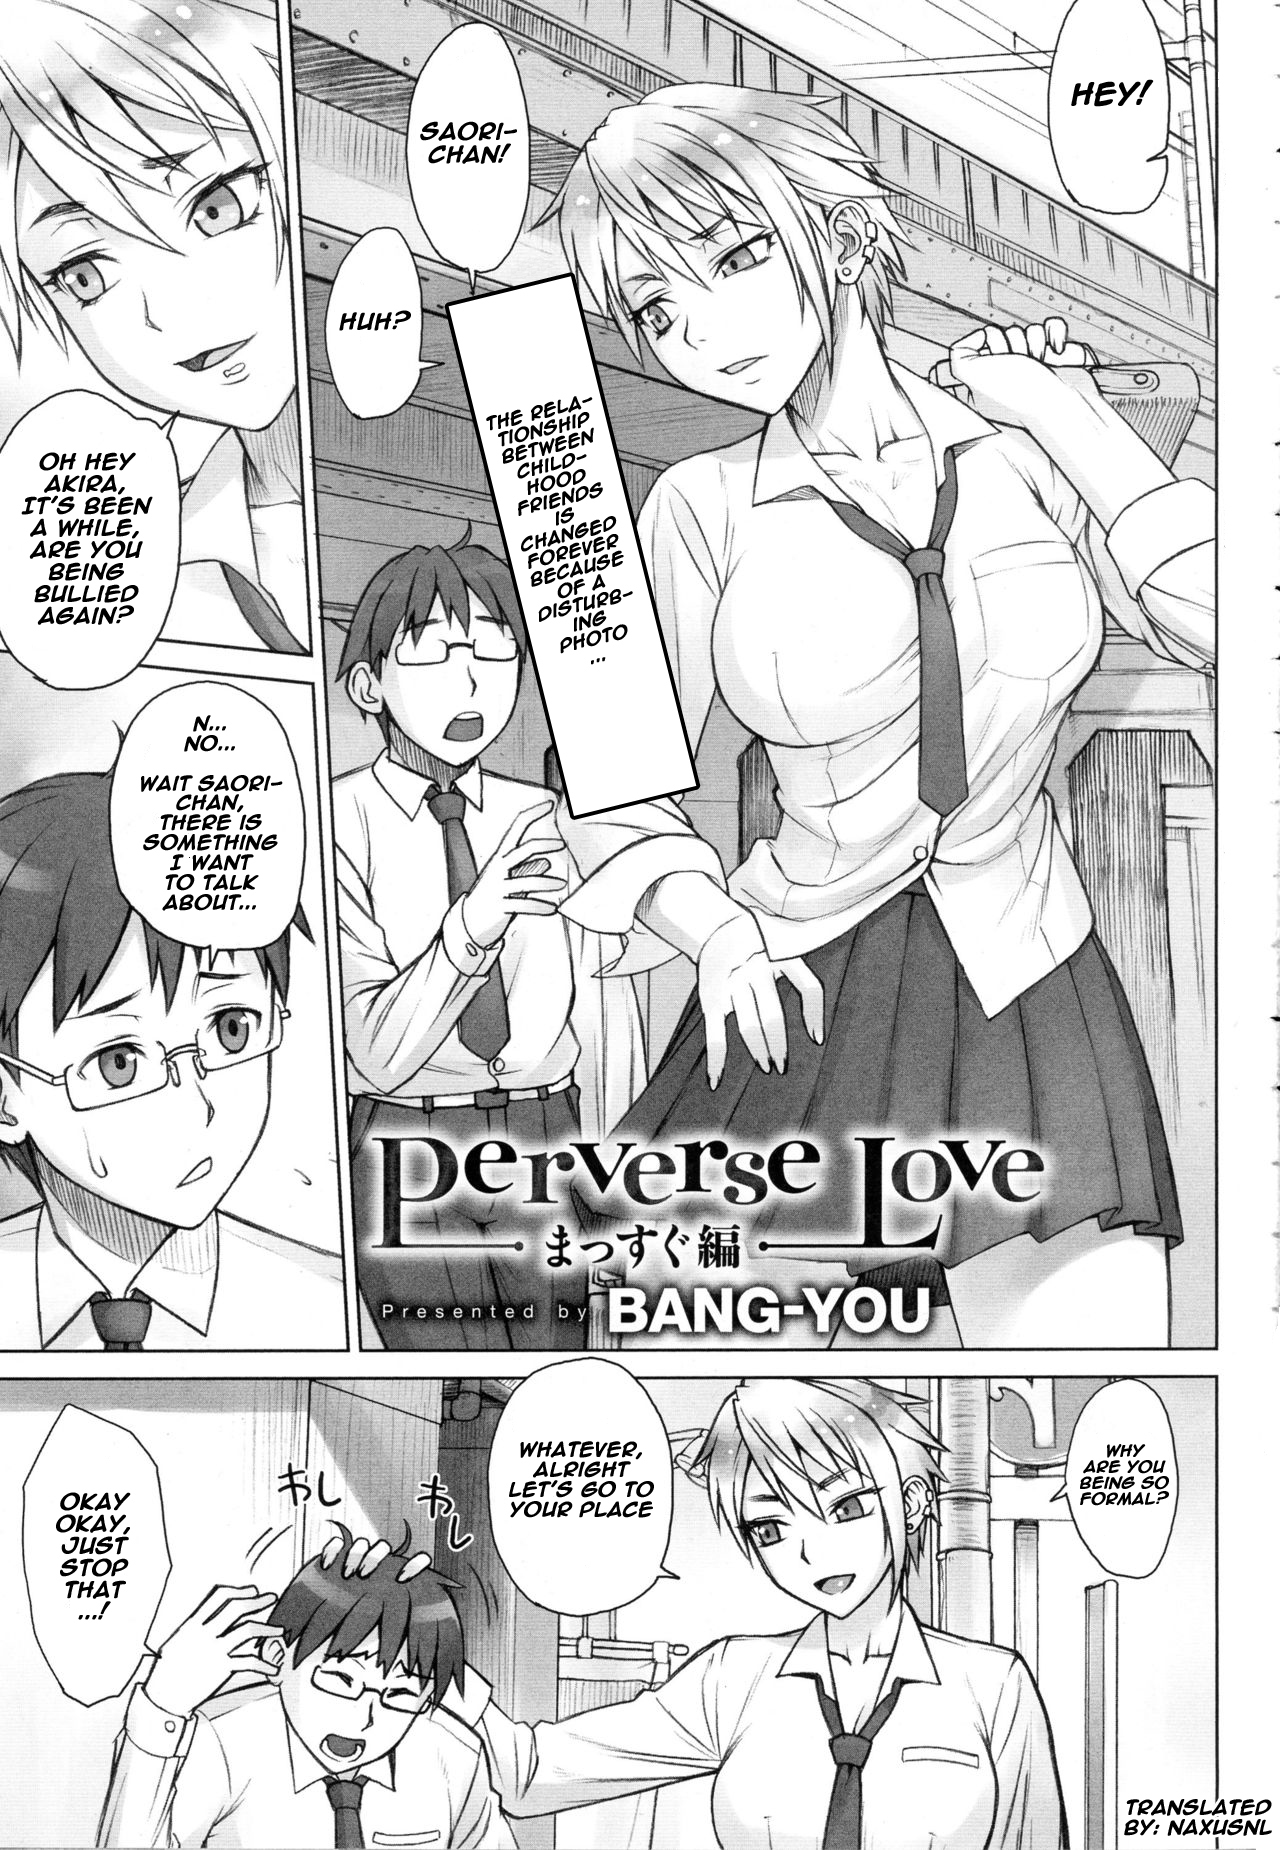 Bang-You - Perverse Love Hentai Comics